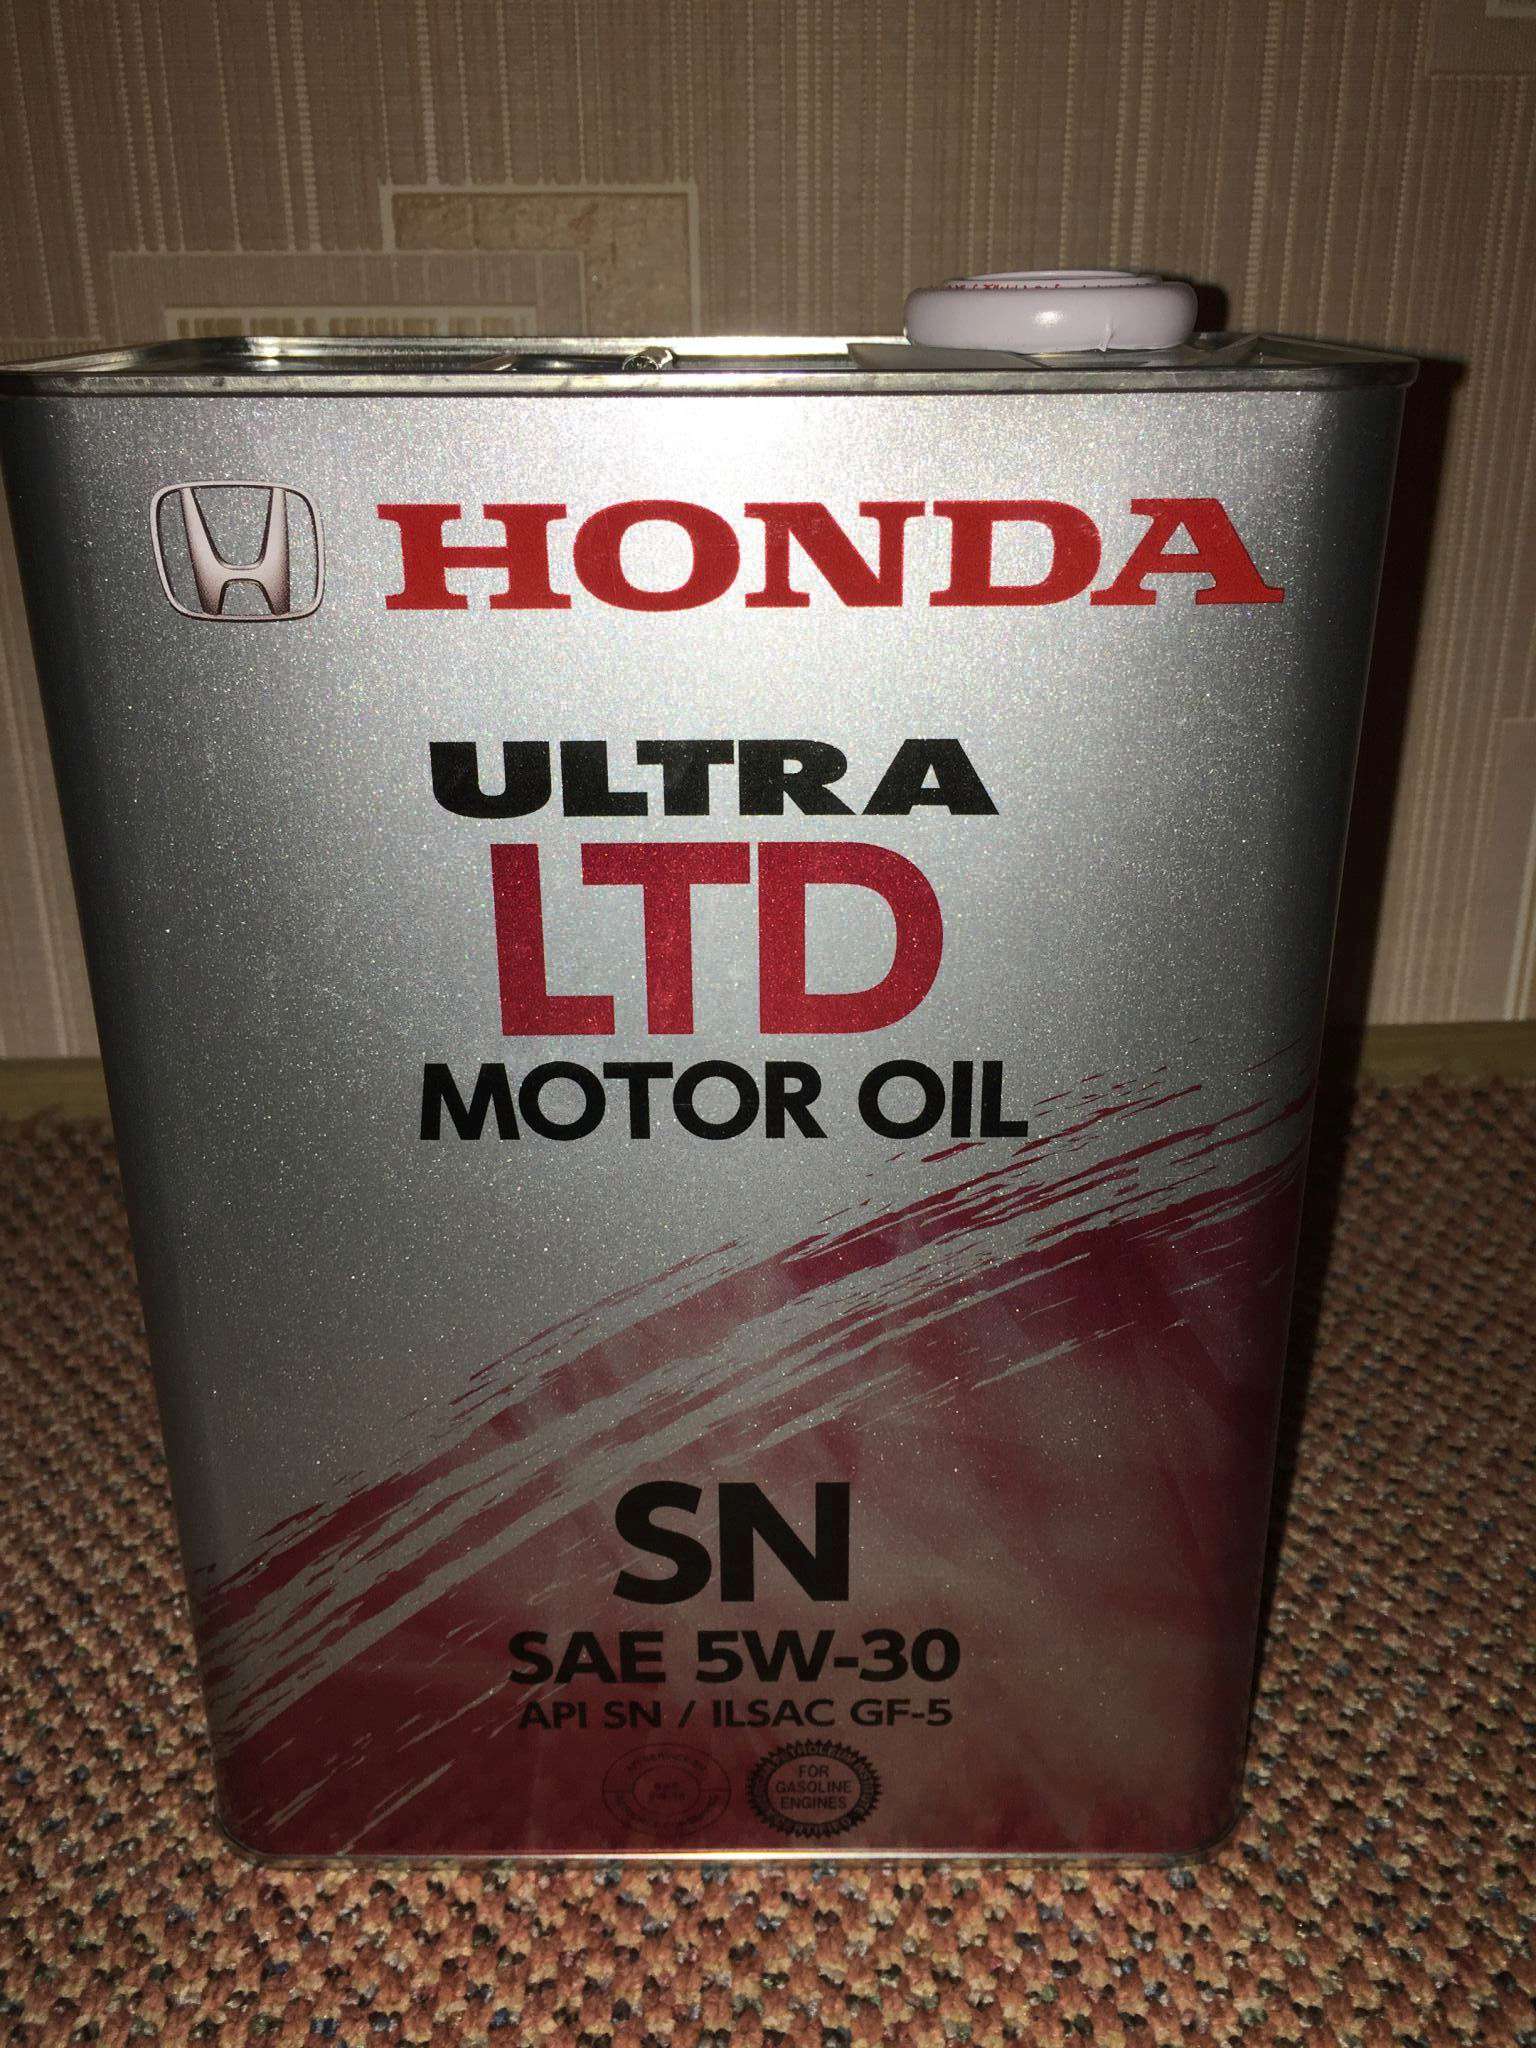 Мотор масло honda. 4л. Honda SN 5w30. Honda Ultra Ltd 5w30 SN. Honda Ultra Leo 5w30 SN 4 Л. Хонда ультра Лтд 5w30.